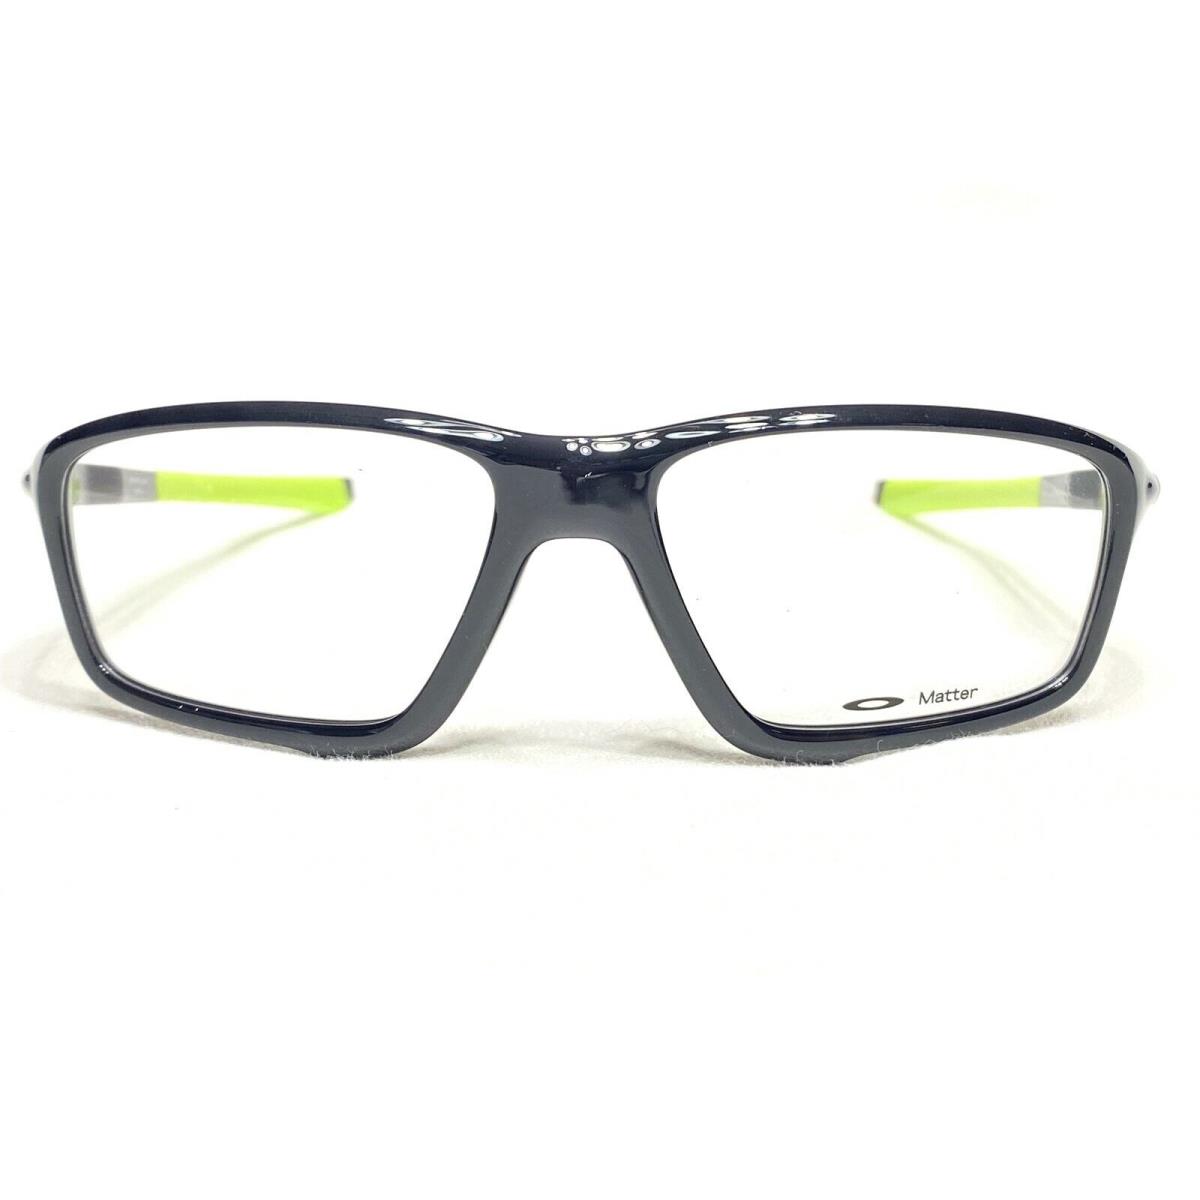 Oakley Crosslink Zero OX8076-0258 Mens Black Ink Eyeglasses Frames 58/16 - Black & Yellow, Frame: Black, Manufacturer: